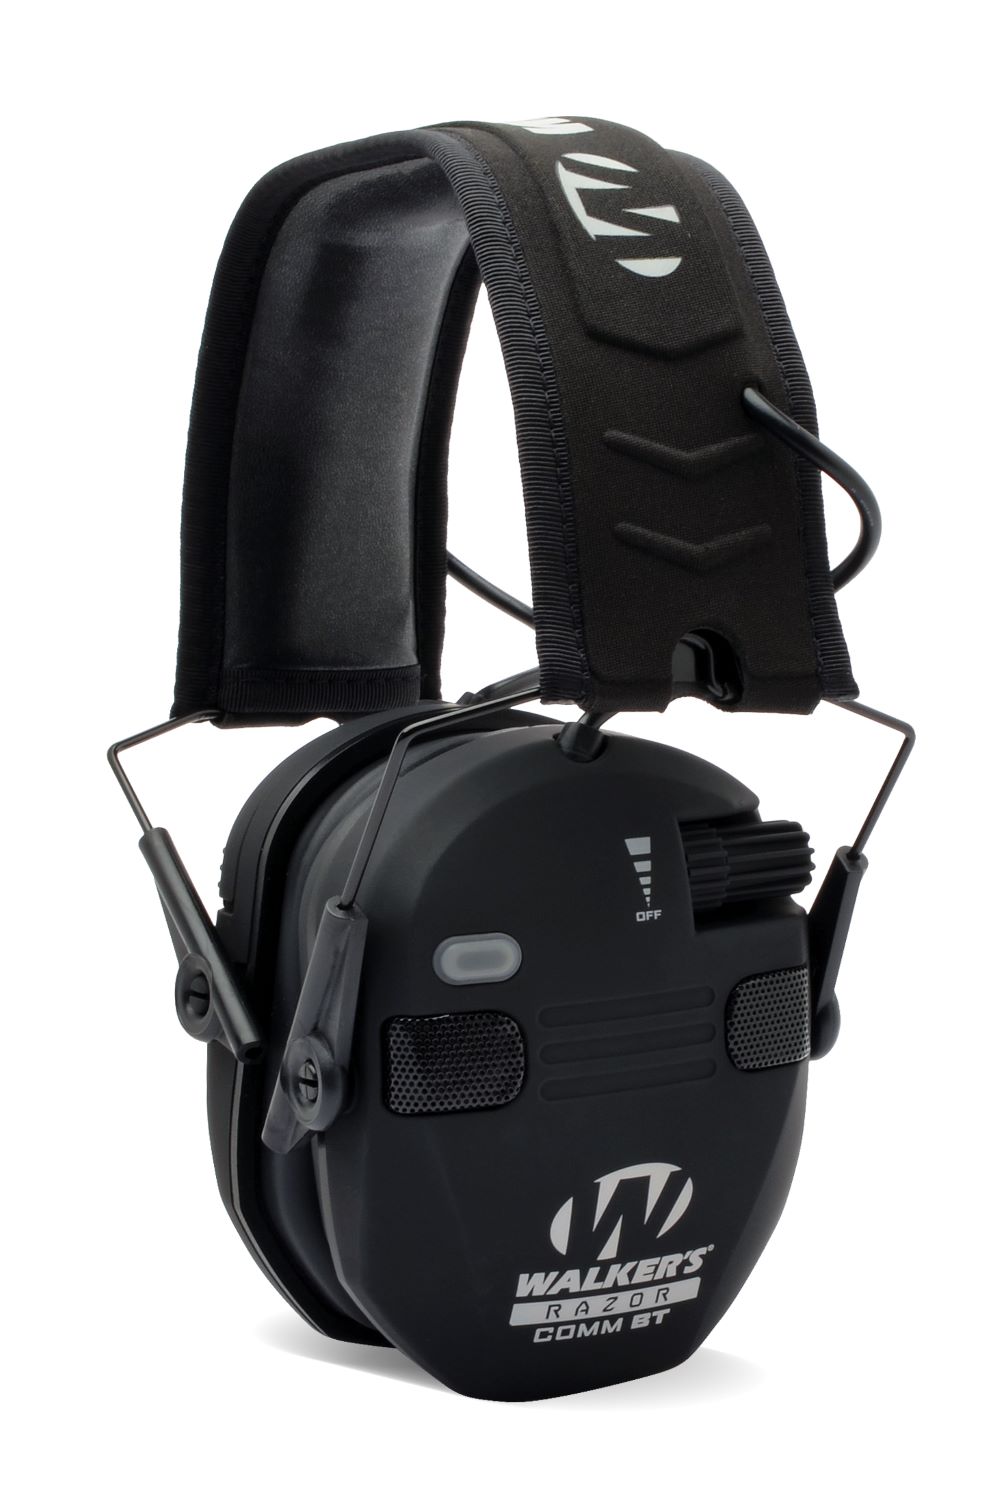 Walker's Razor Slim Electronic Bluetooth Shooting Ear Protection Muff, Black 